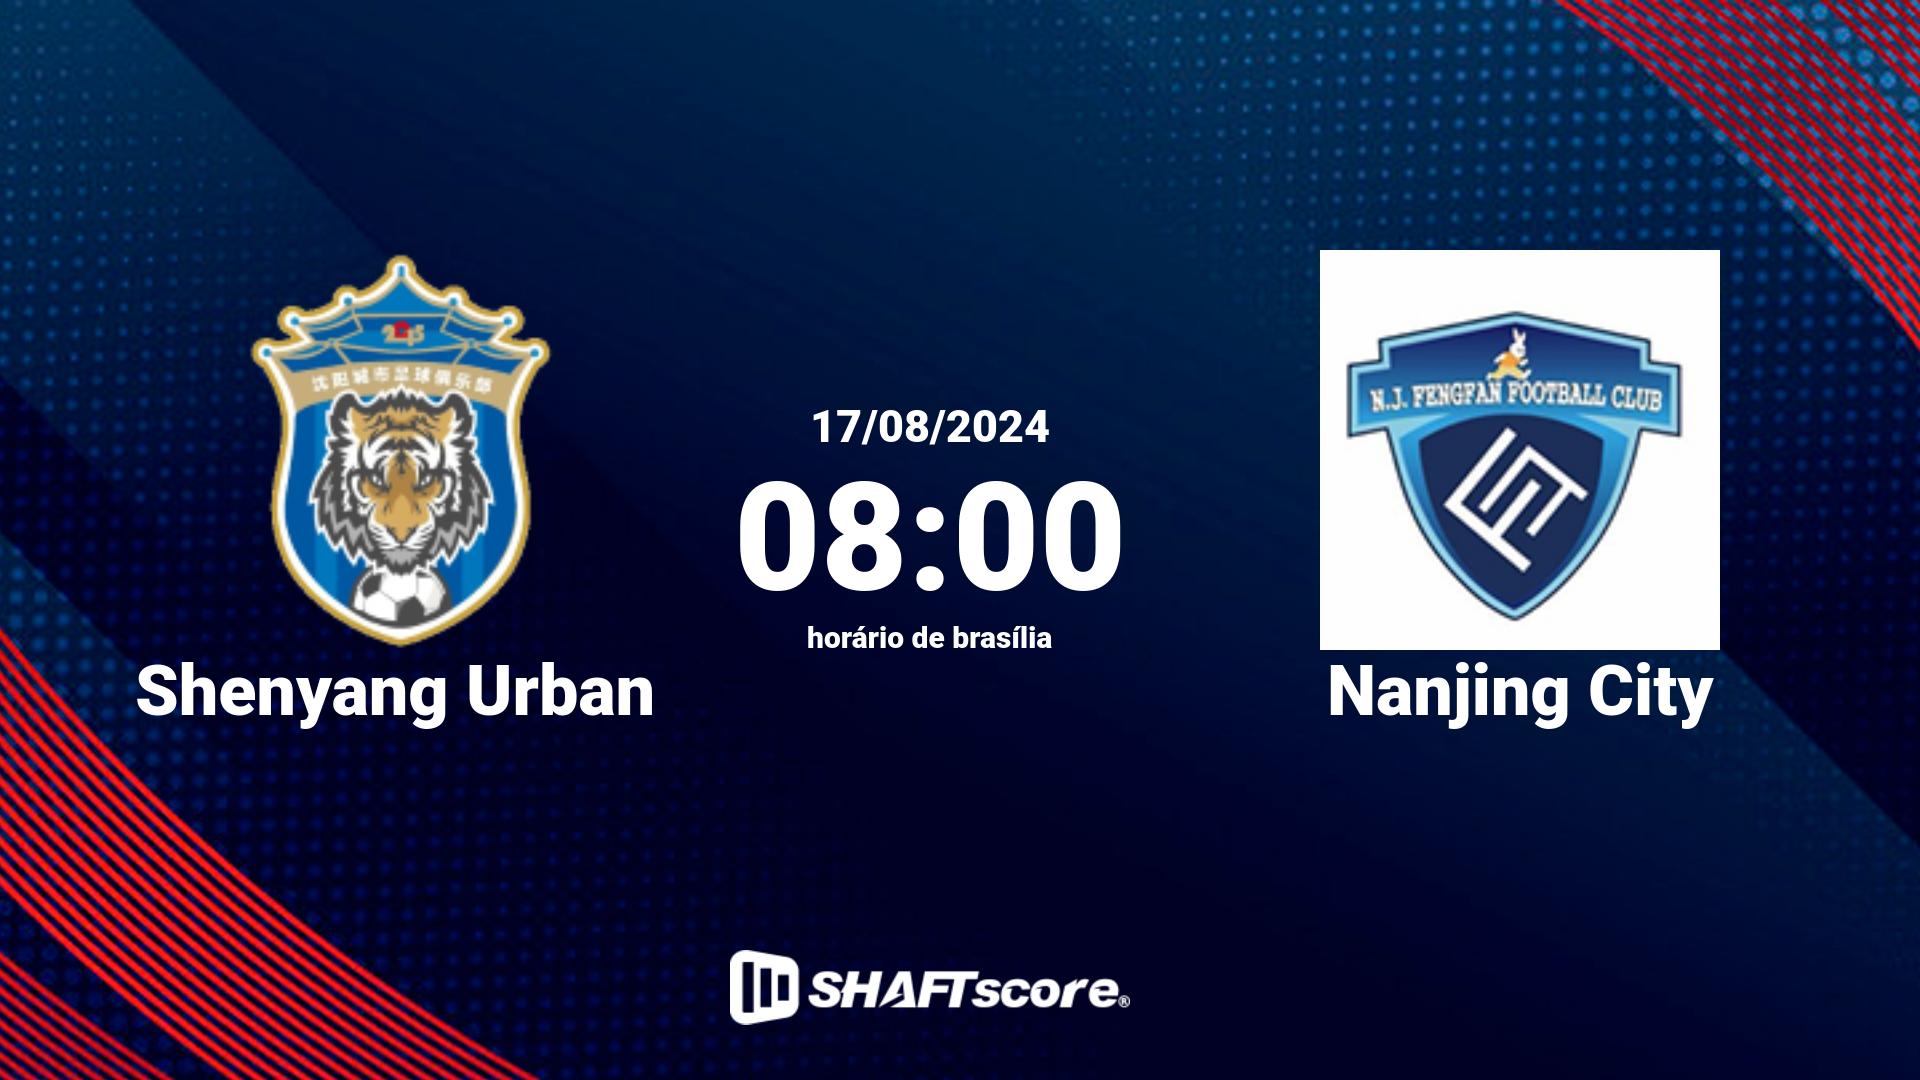 Estatísticas do jogo Shenyang Urban vs Nanjing City 17.08 08:00